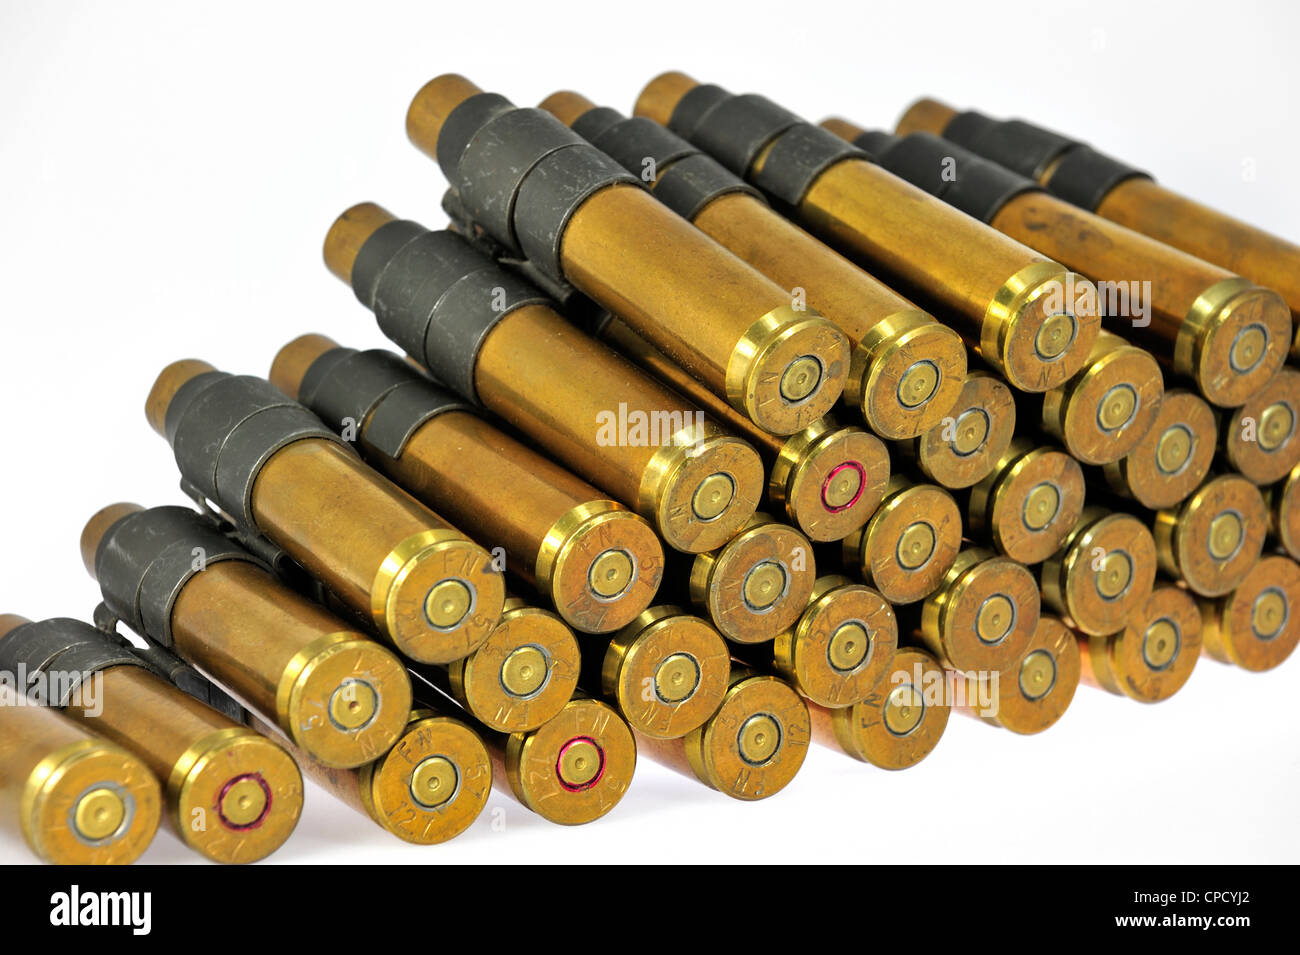 M2 Browning .50 caliber machine gun cartridges in ammunition belt made by FN Herstal weapon factory in Belgium Stock Photo